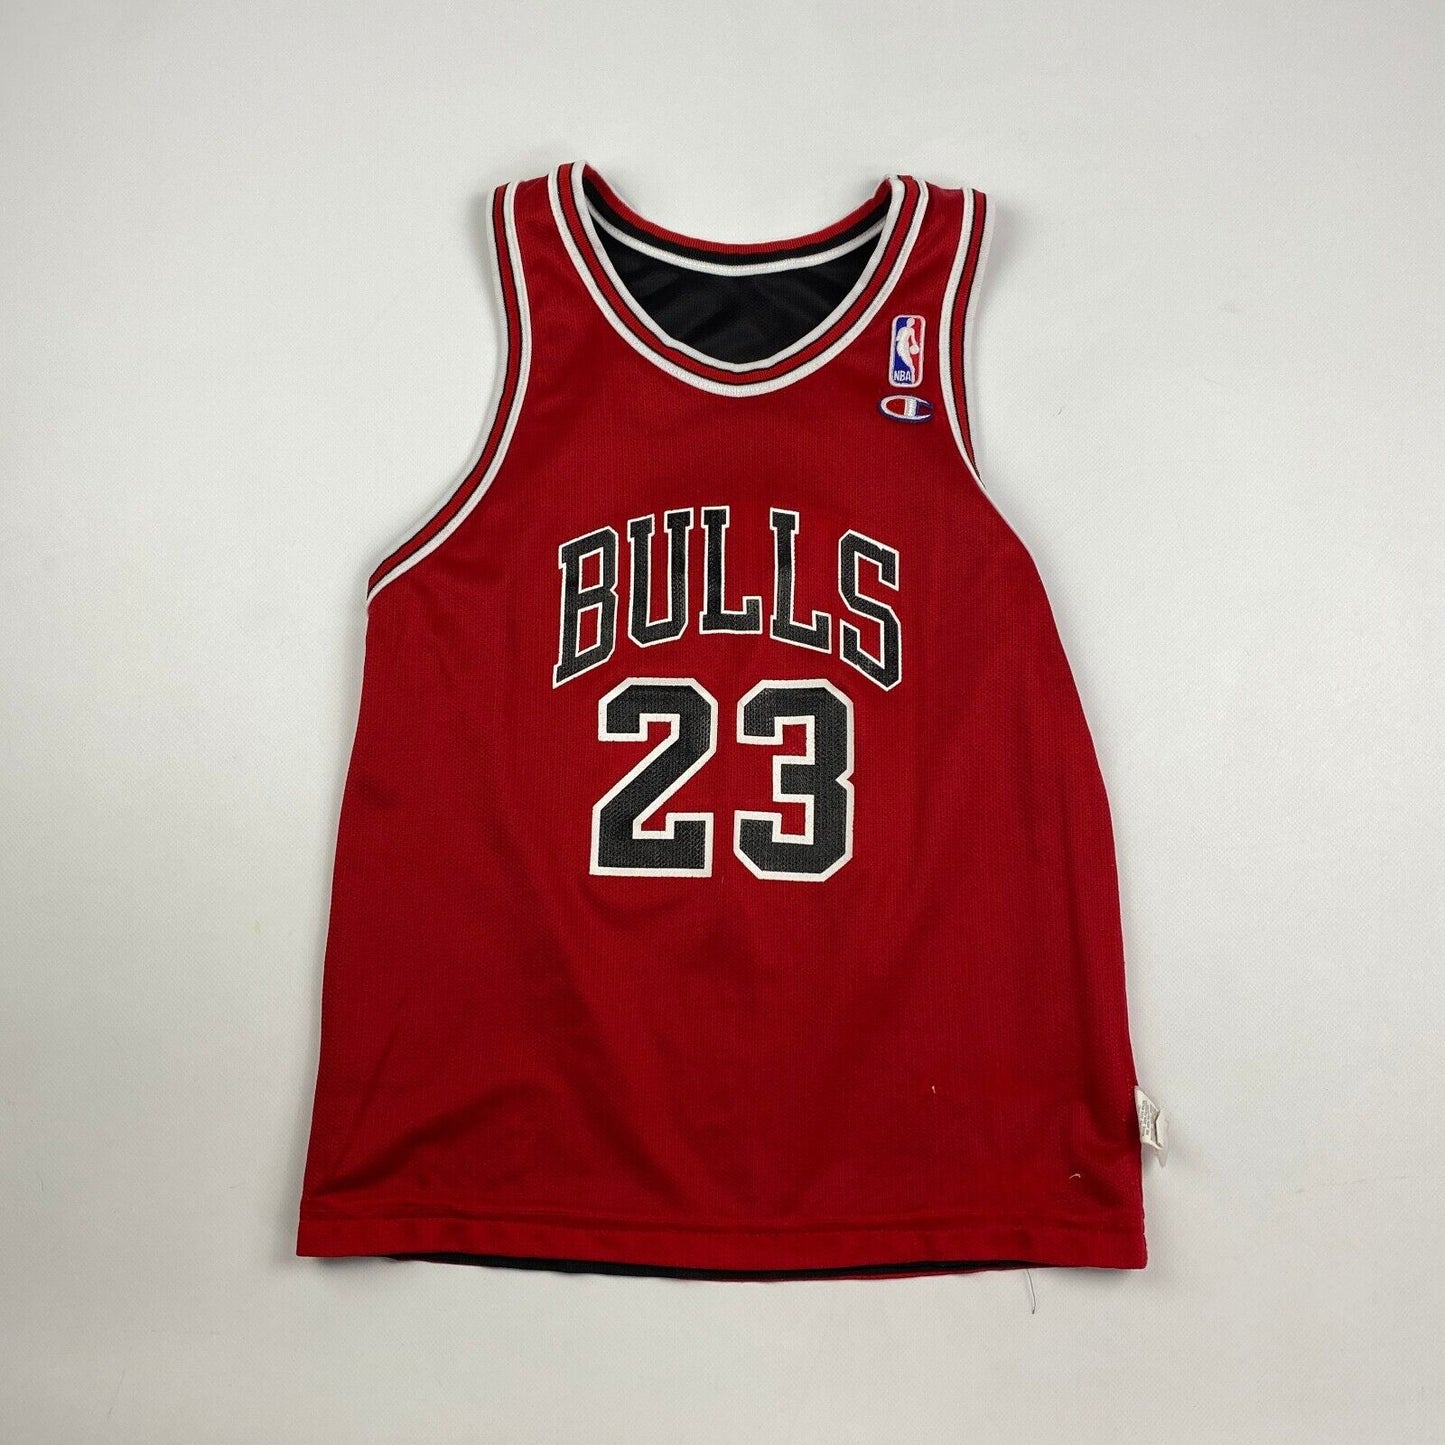 VINTAGE 90s Champion Chicago Bulls #23 Jordan Basketball Jersey sz L 14-16 Youth